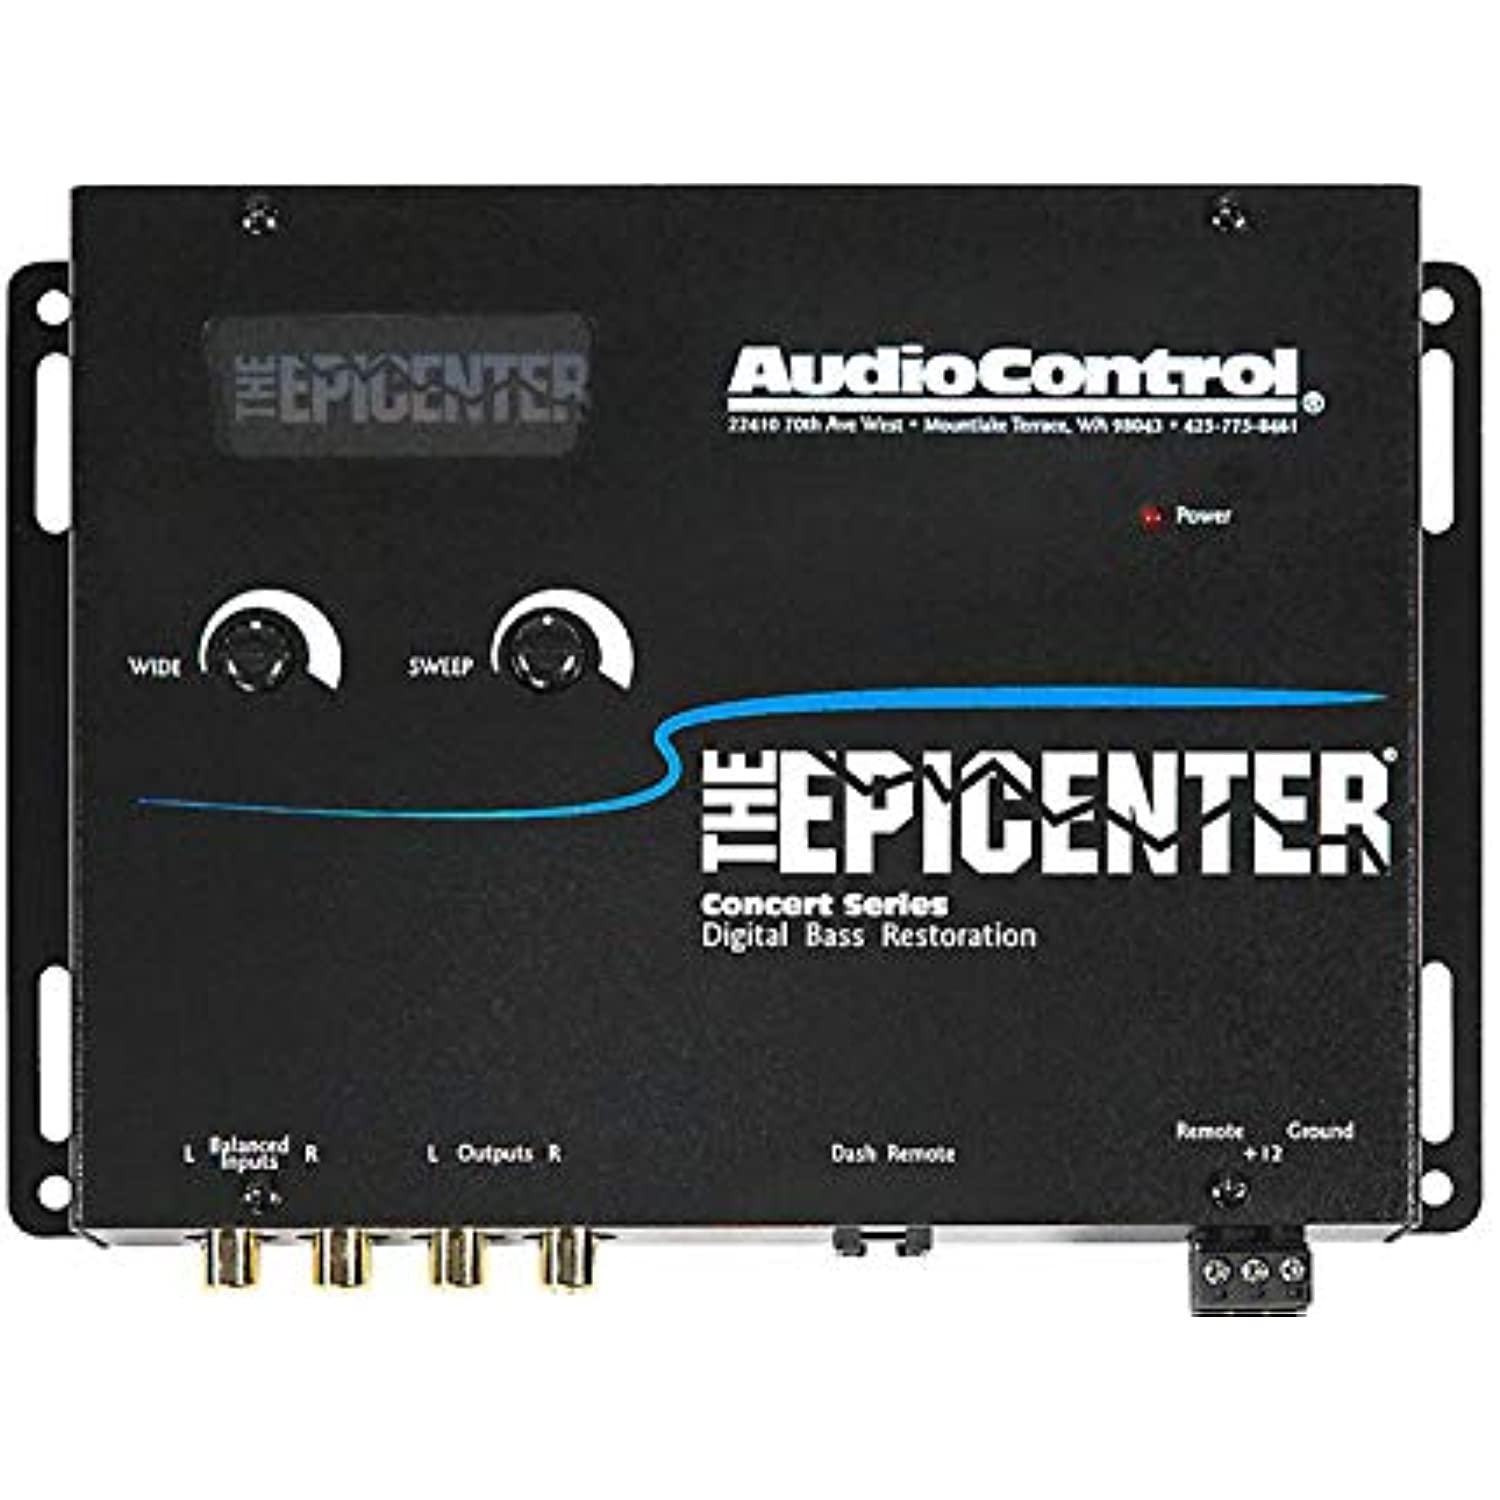 AudioControl The Epicenter Bass Booster Expander & Bass Restoration Processor